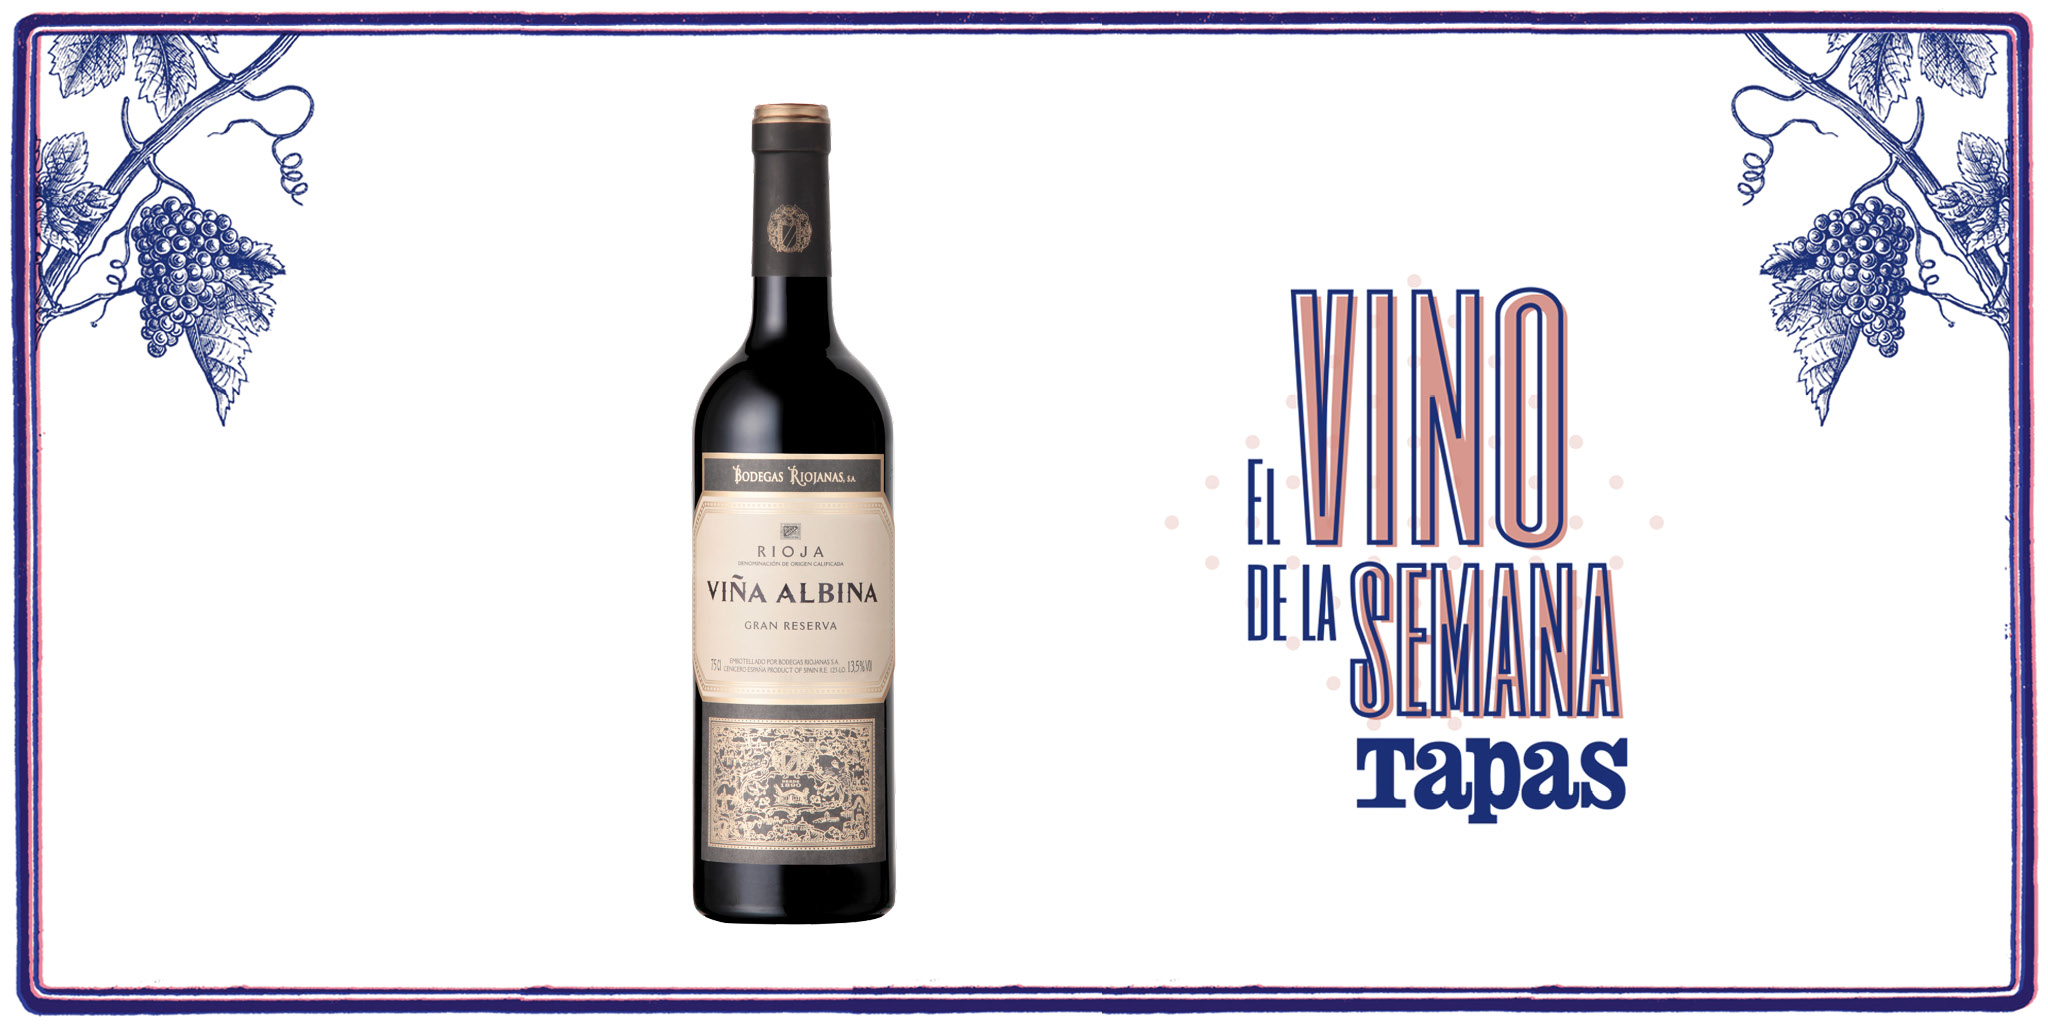 Viña Albina Gran Reserva 2013, el vino de la semana para la revista Tapas